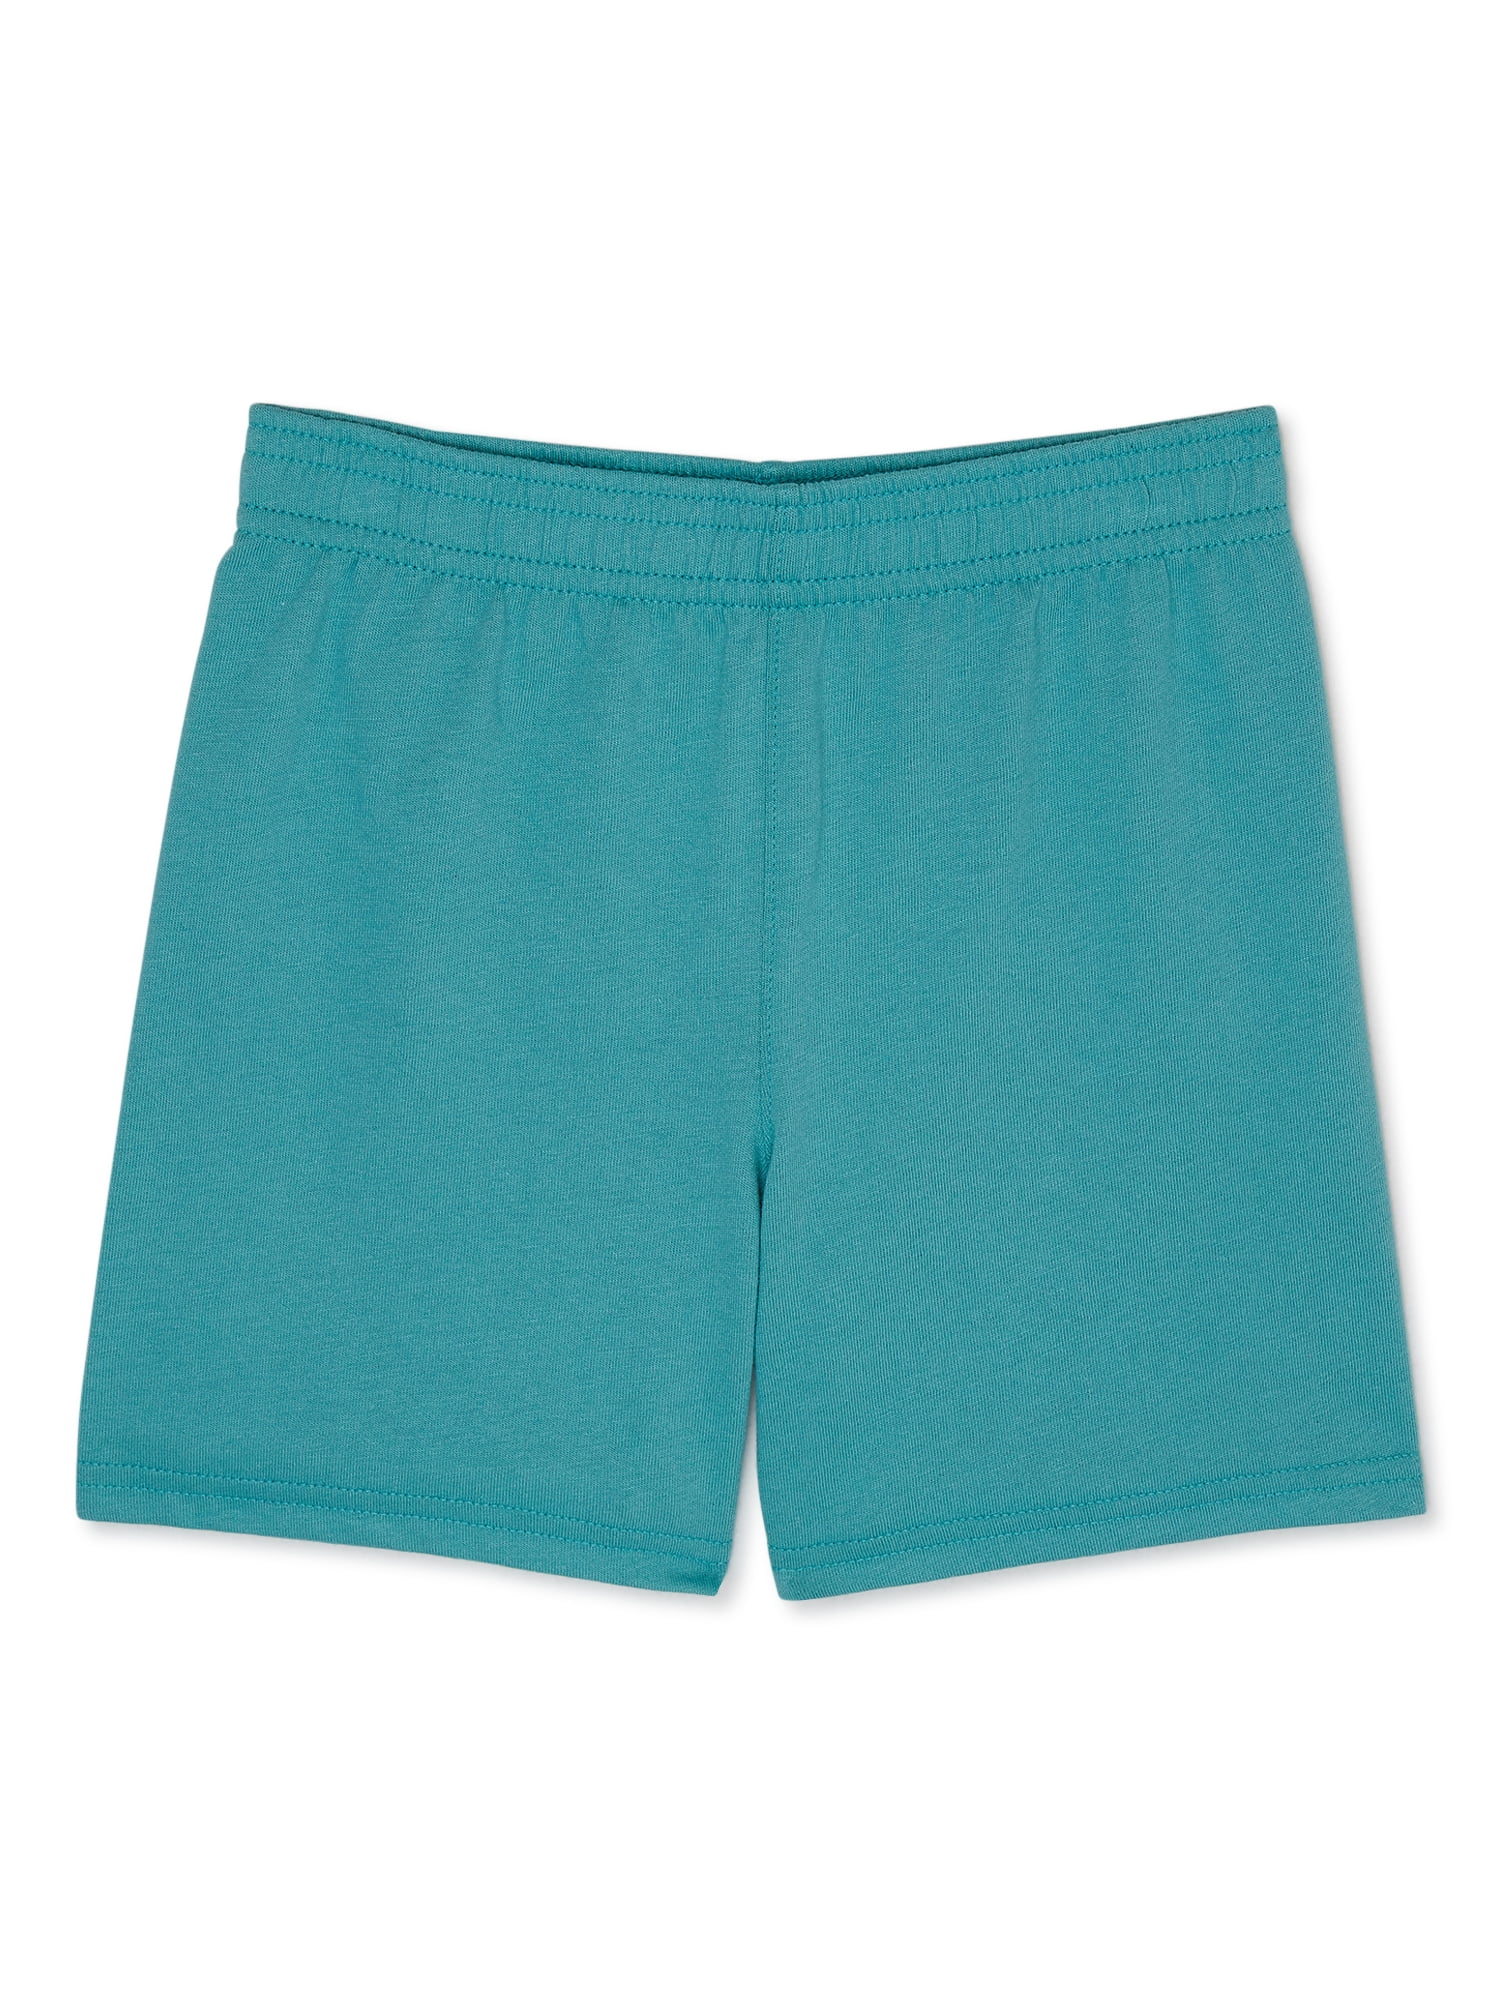 Garanimals Toddler Boy Solid Jersey Shorts, Sizes 18M-5T - Walmart.com